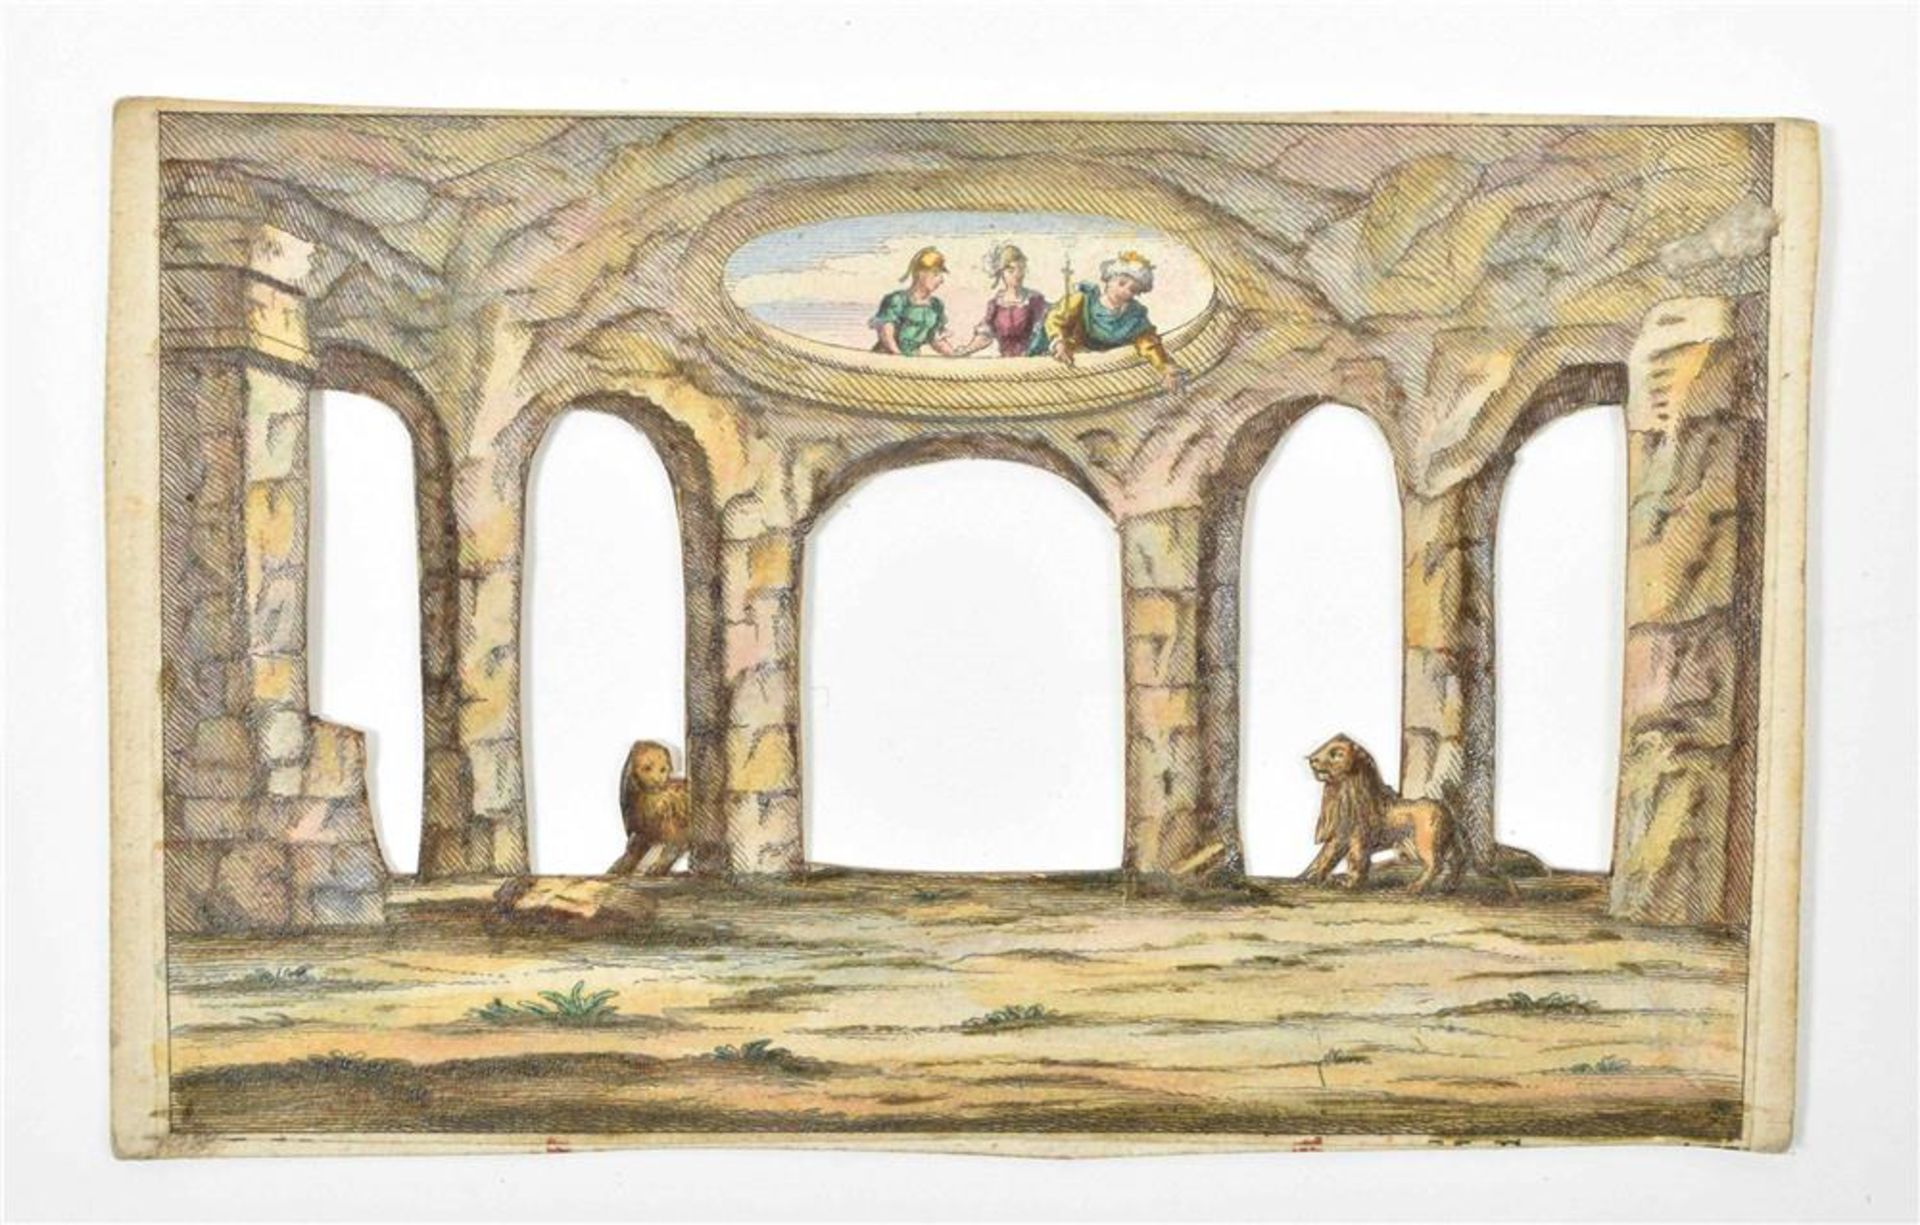 [Diorama/Paper theatre] Daniël in the Lion's den - Image 4 of 8